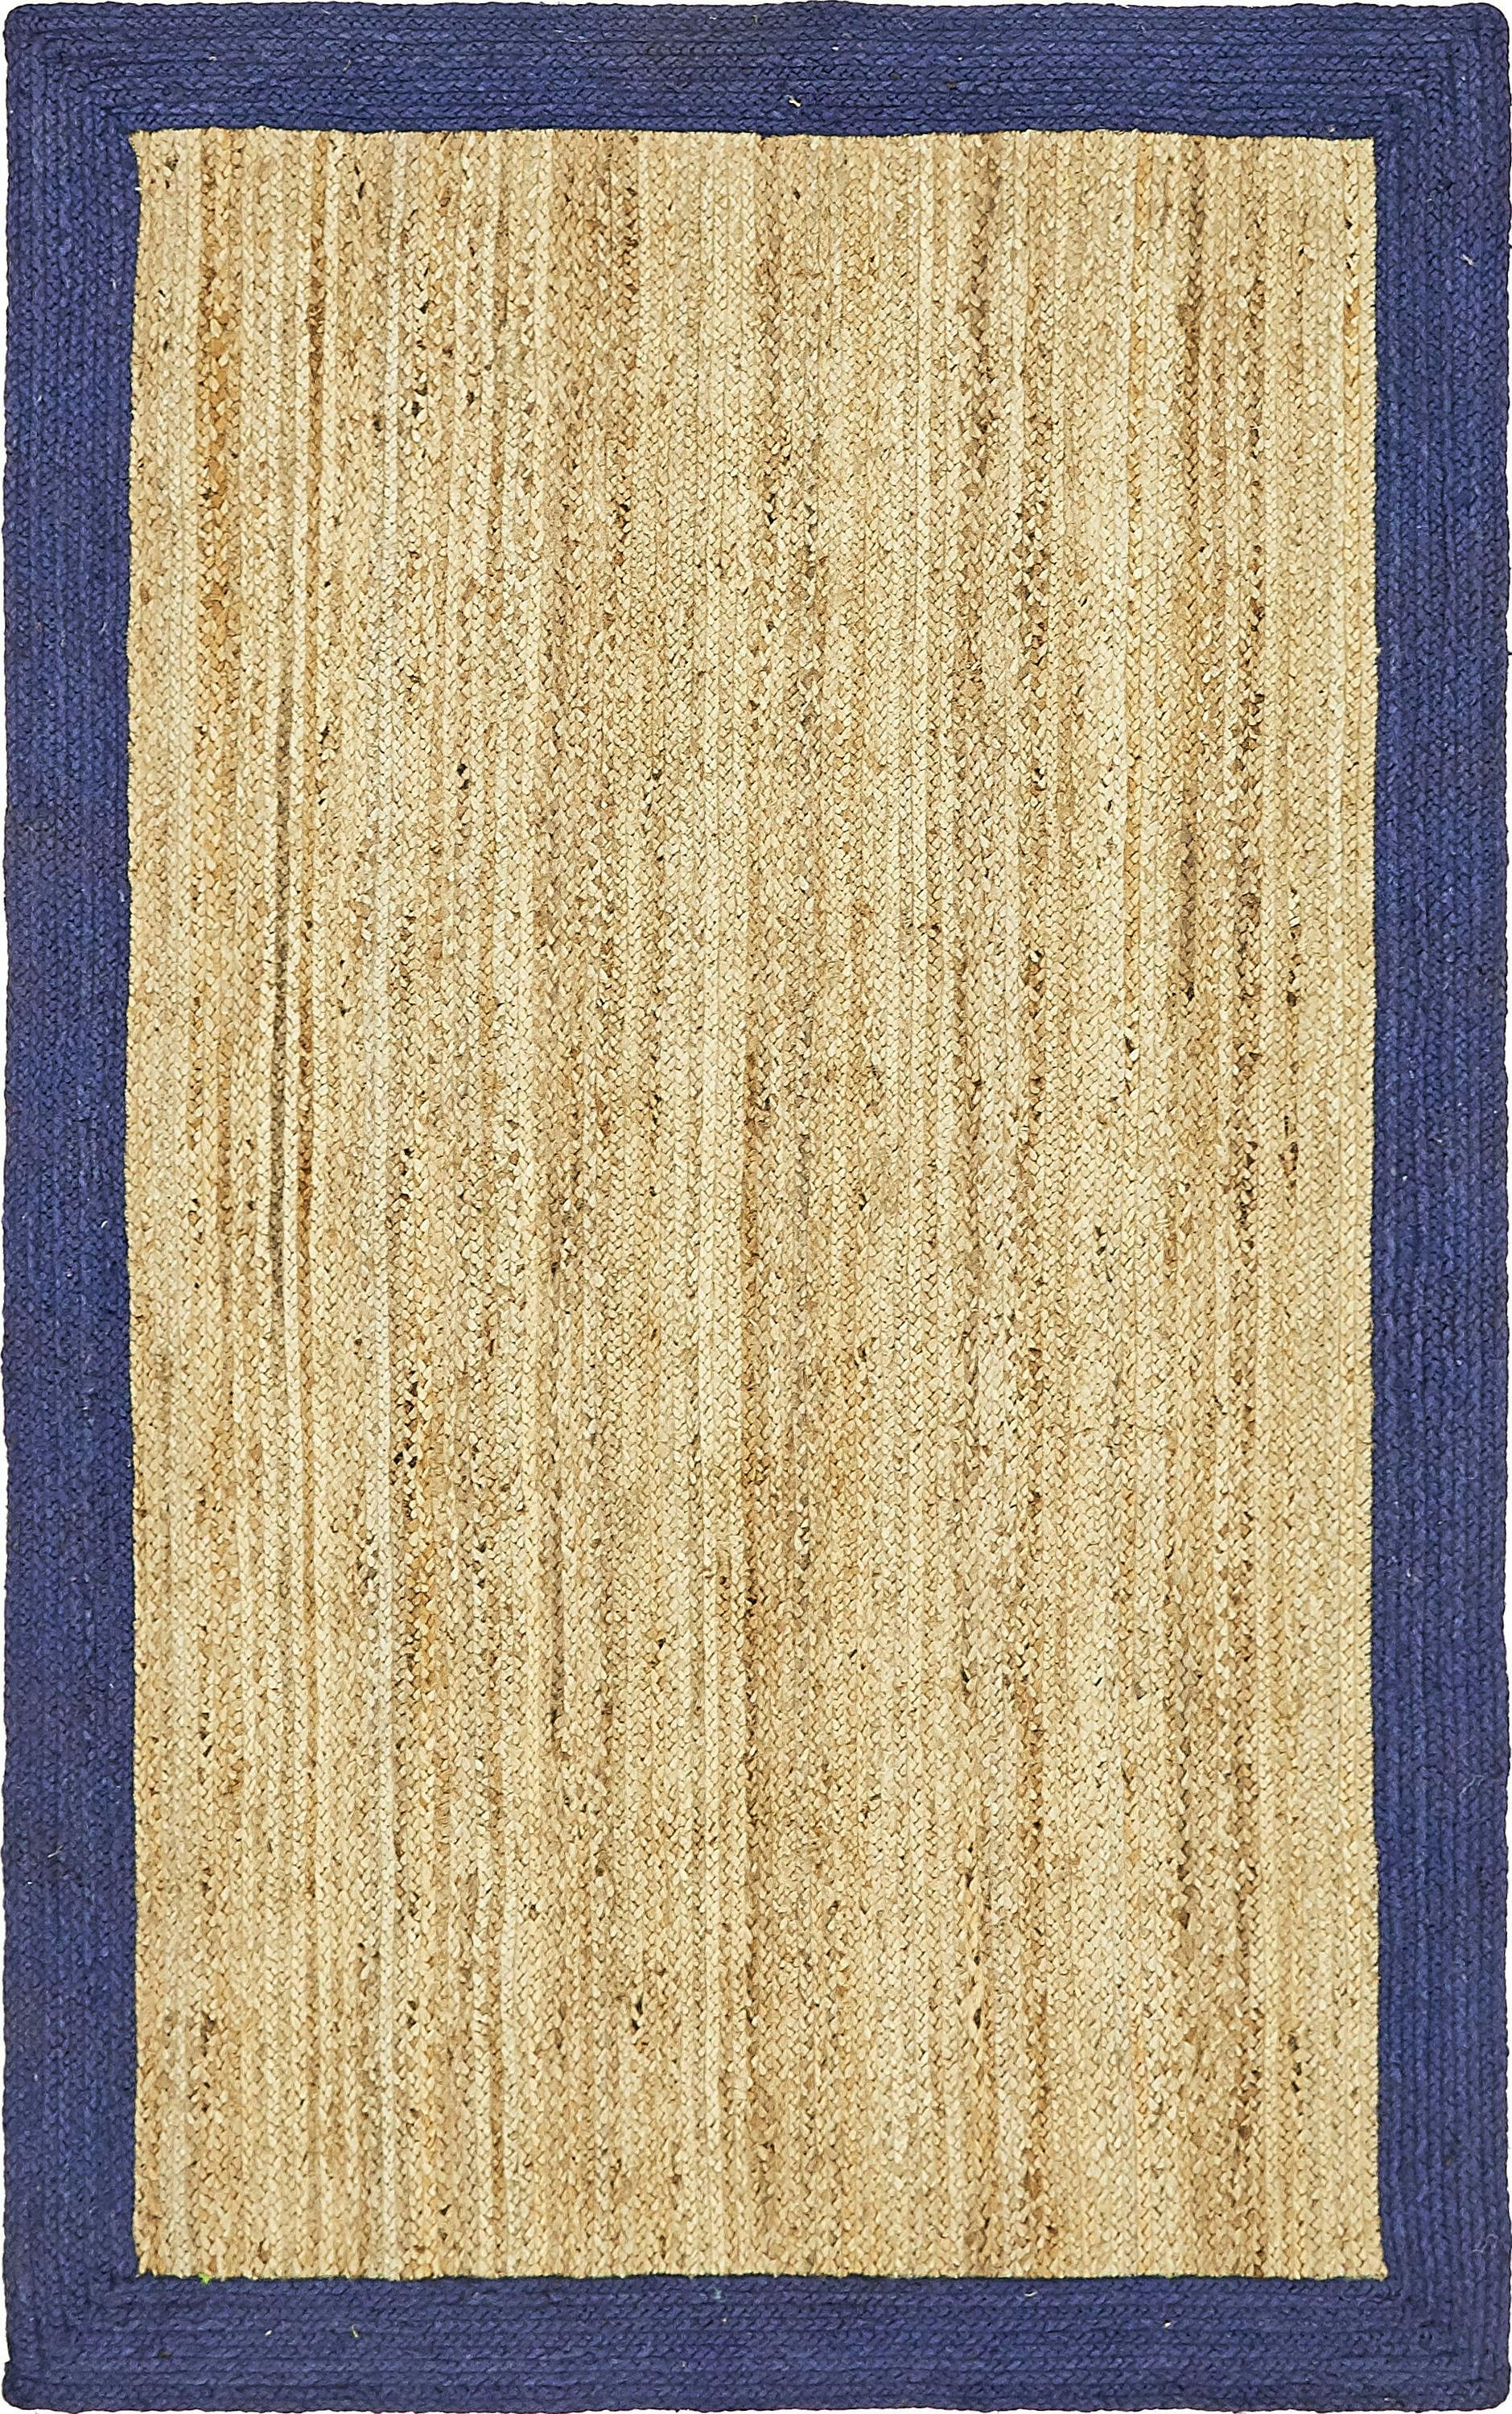 Handmade Braided Jute & Cotton 5' x 8' Rectangular Rug in Natural Brown